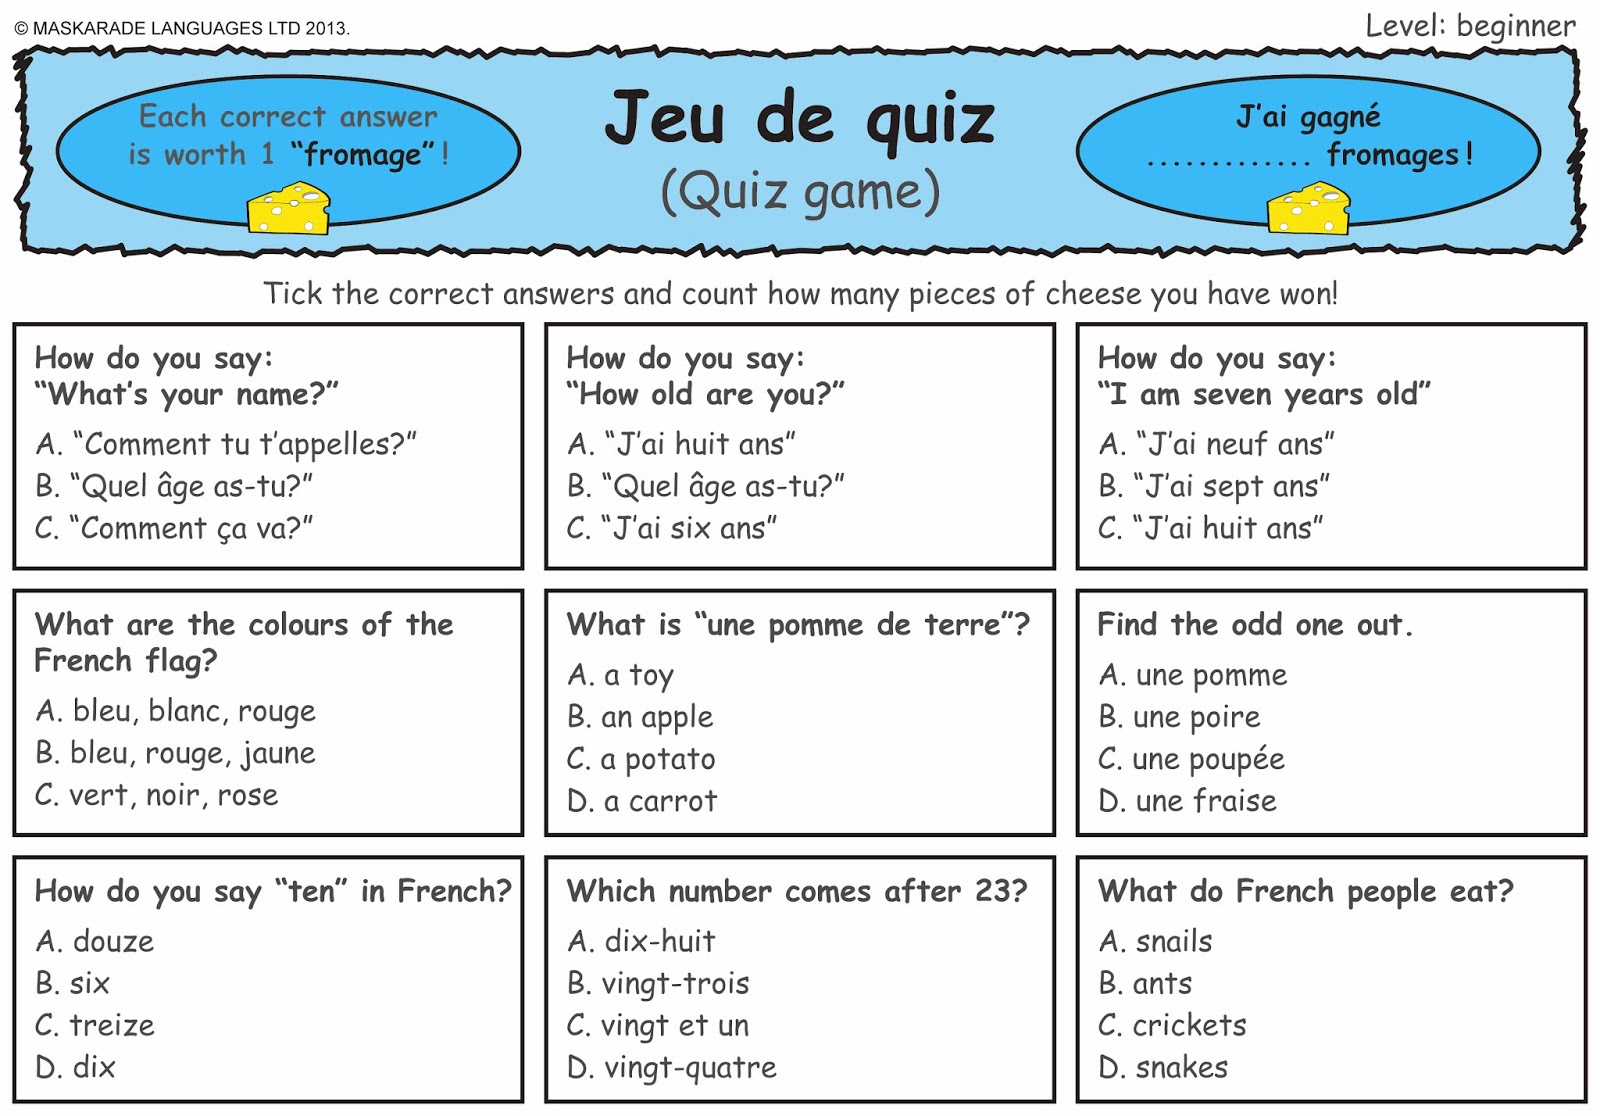 MASKARADE LANGUAGES French Quiz Level Beginner 